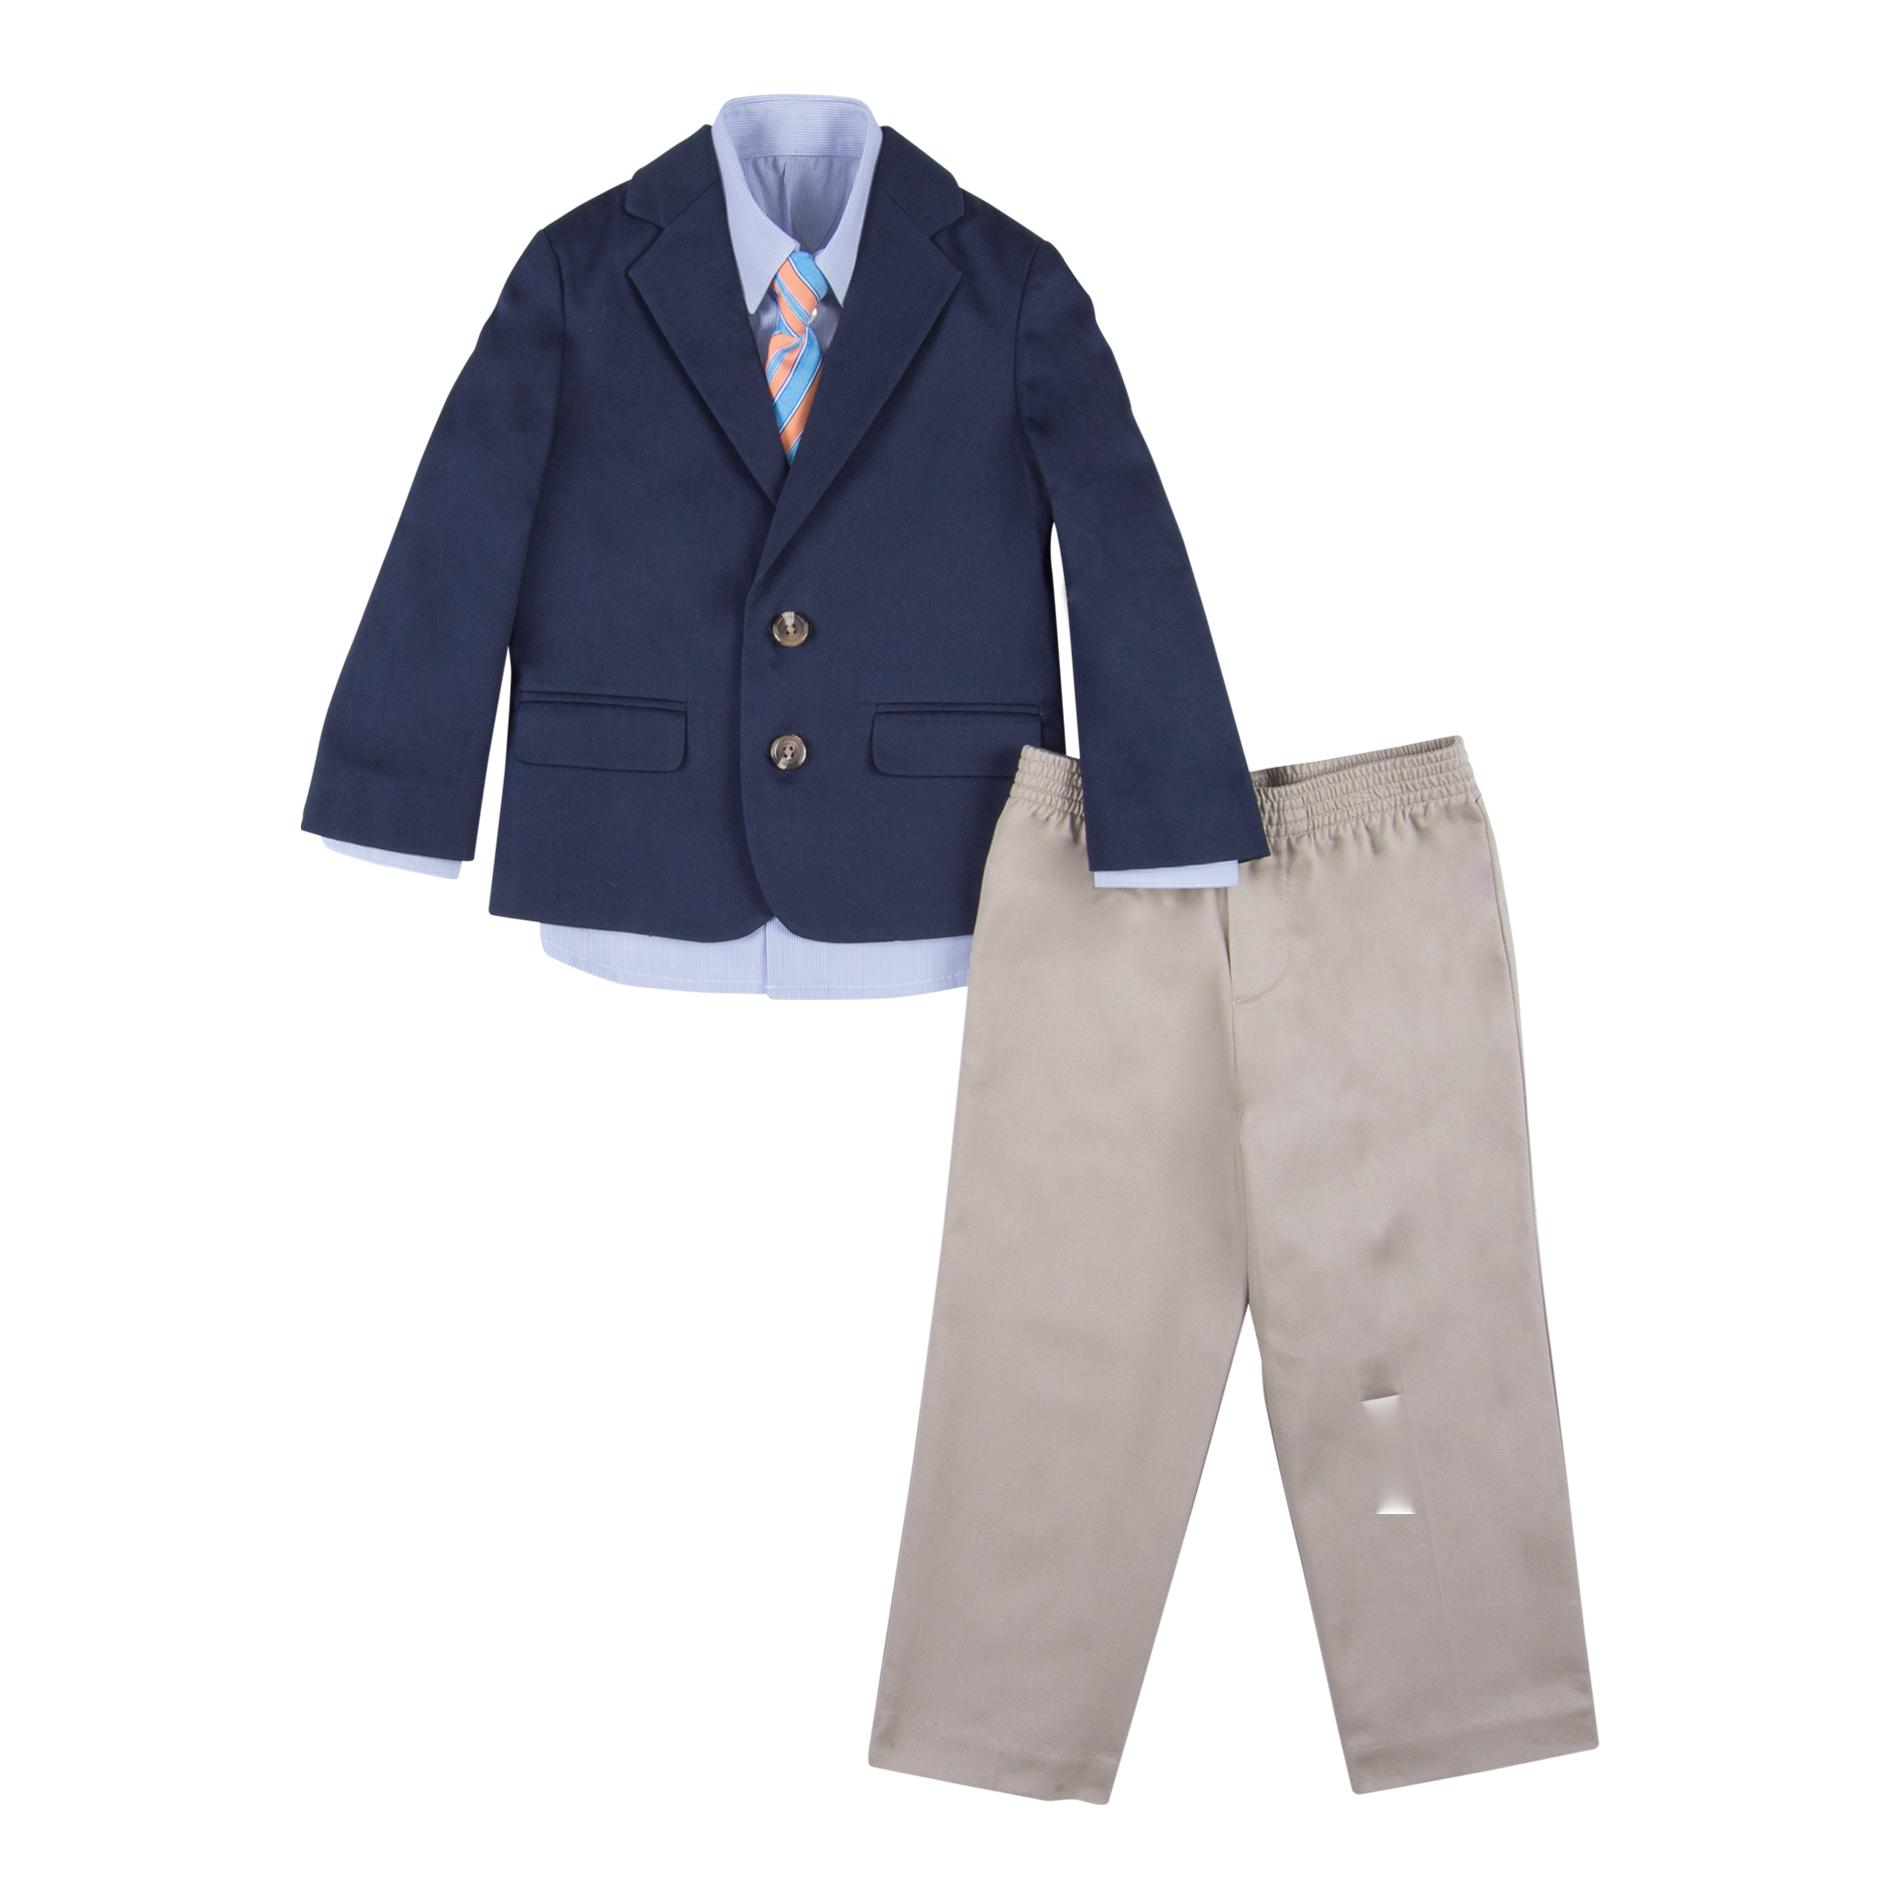 Dockers Infant & Toddler Boys' Blazer, Dress Shirt, Pants & Necktie